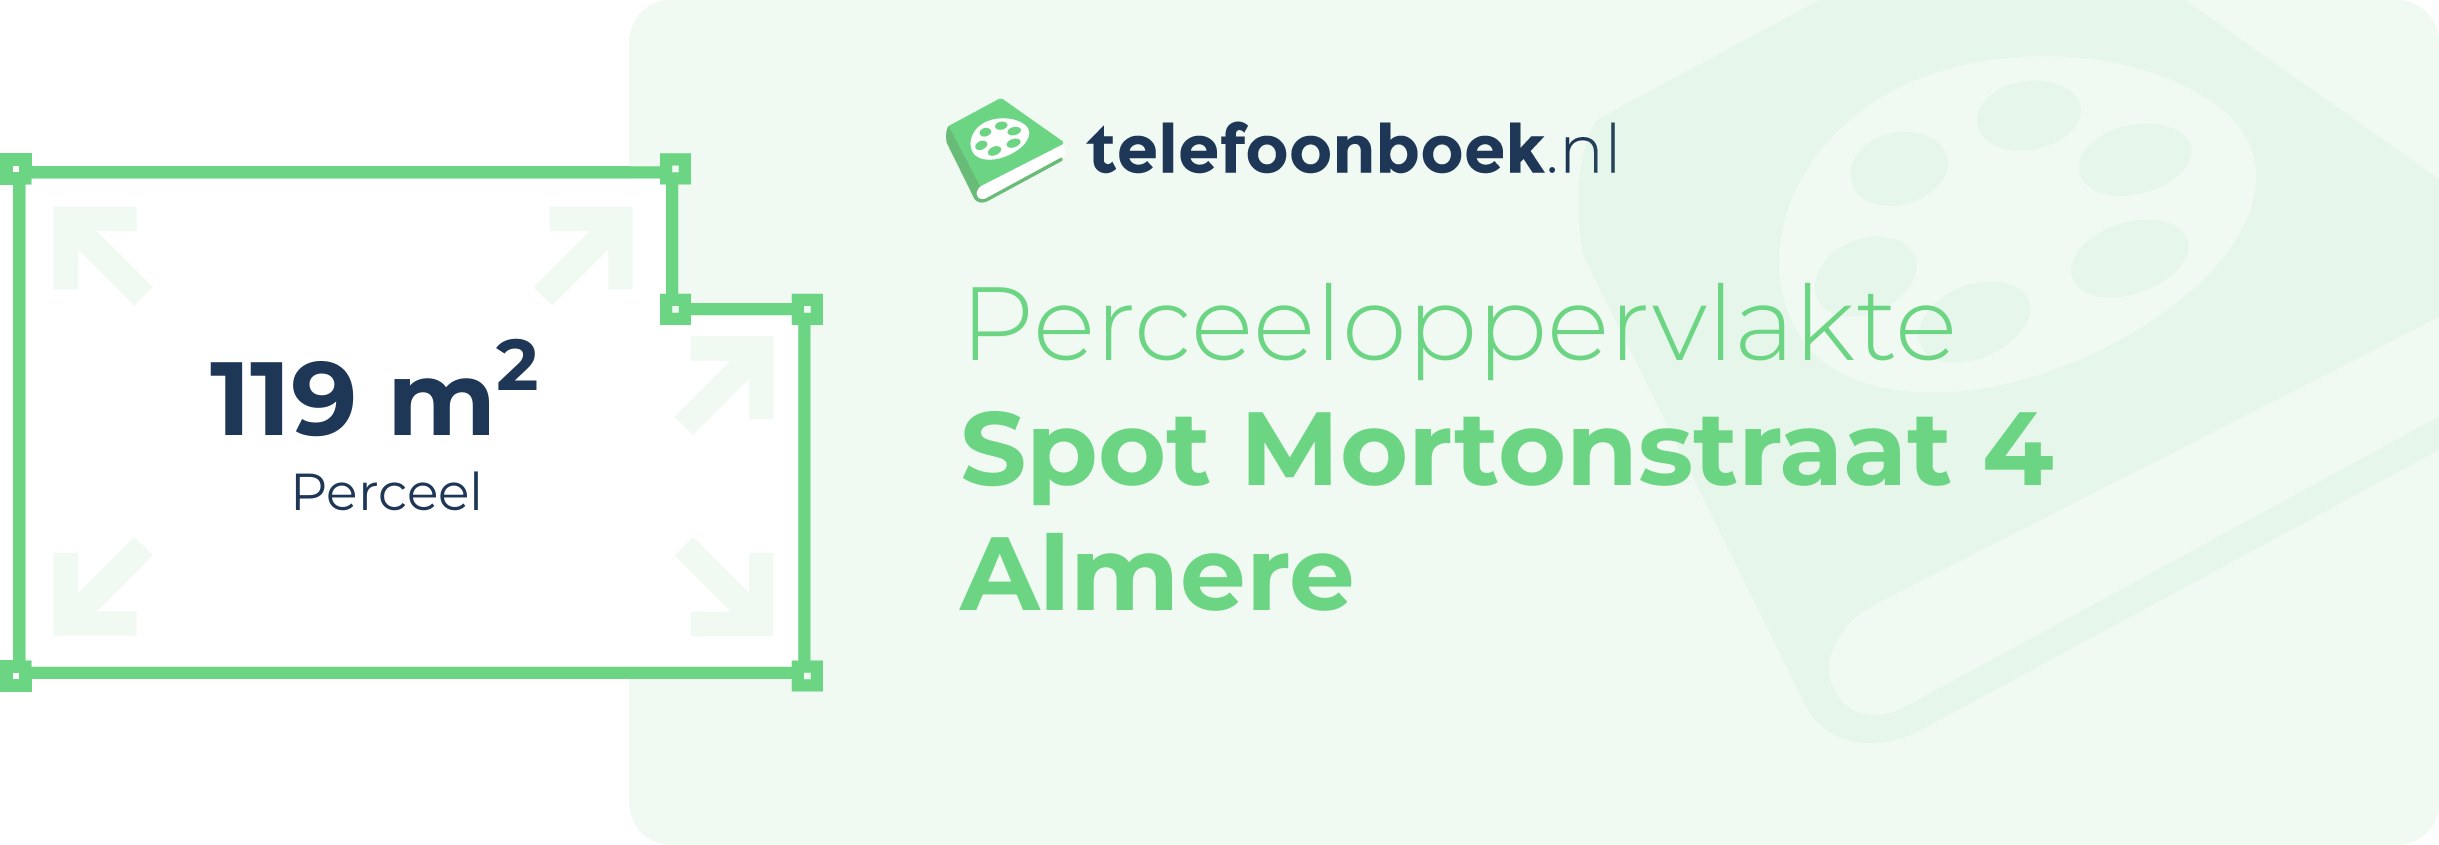 Perceeloppervlakte Spot Mortonstraat 4 Almere